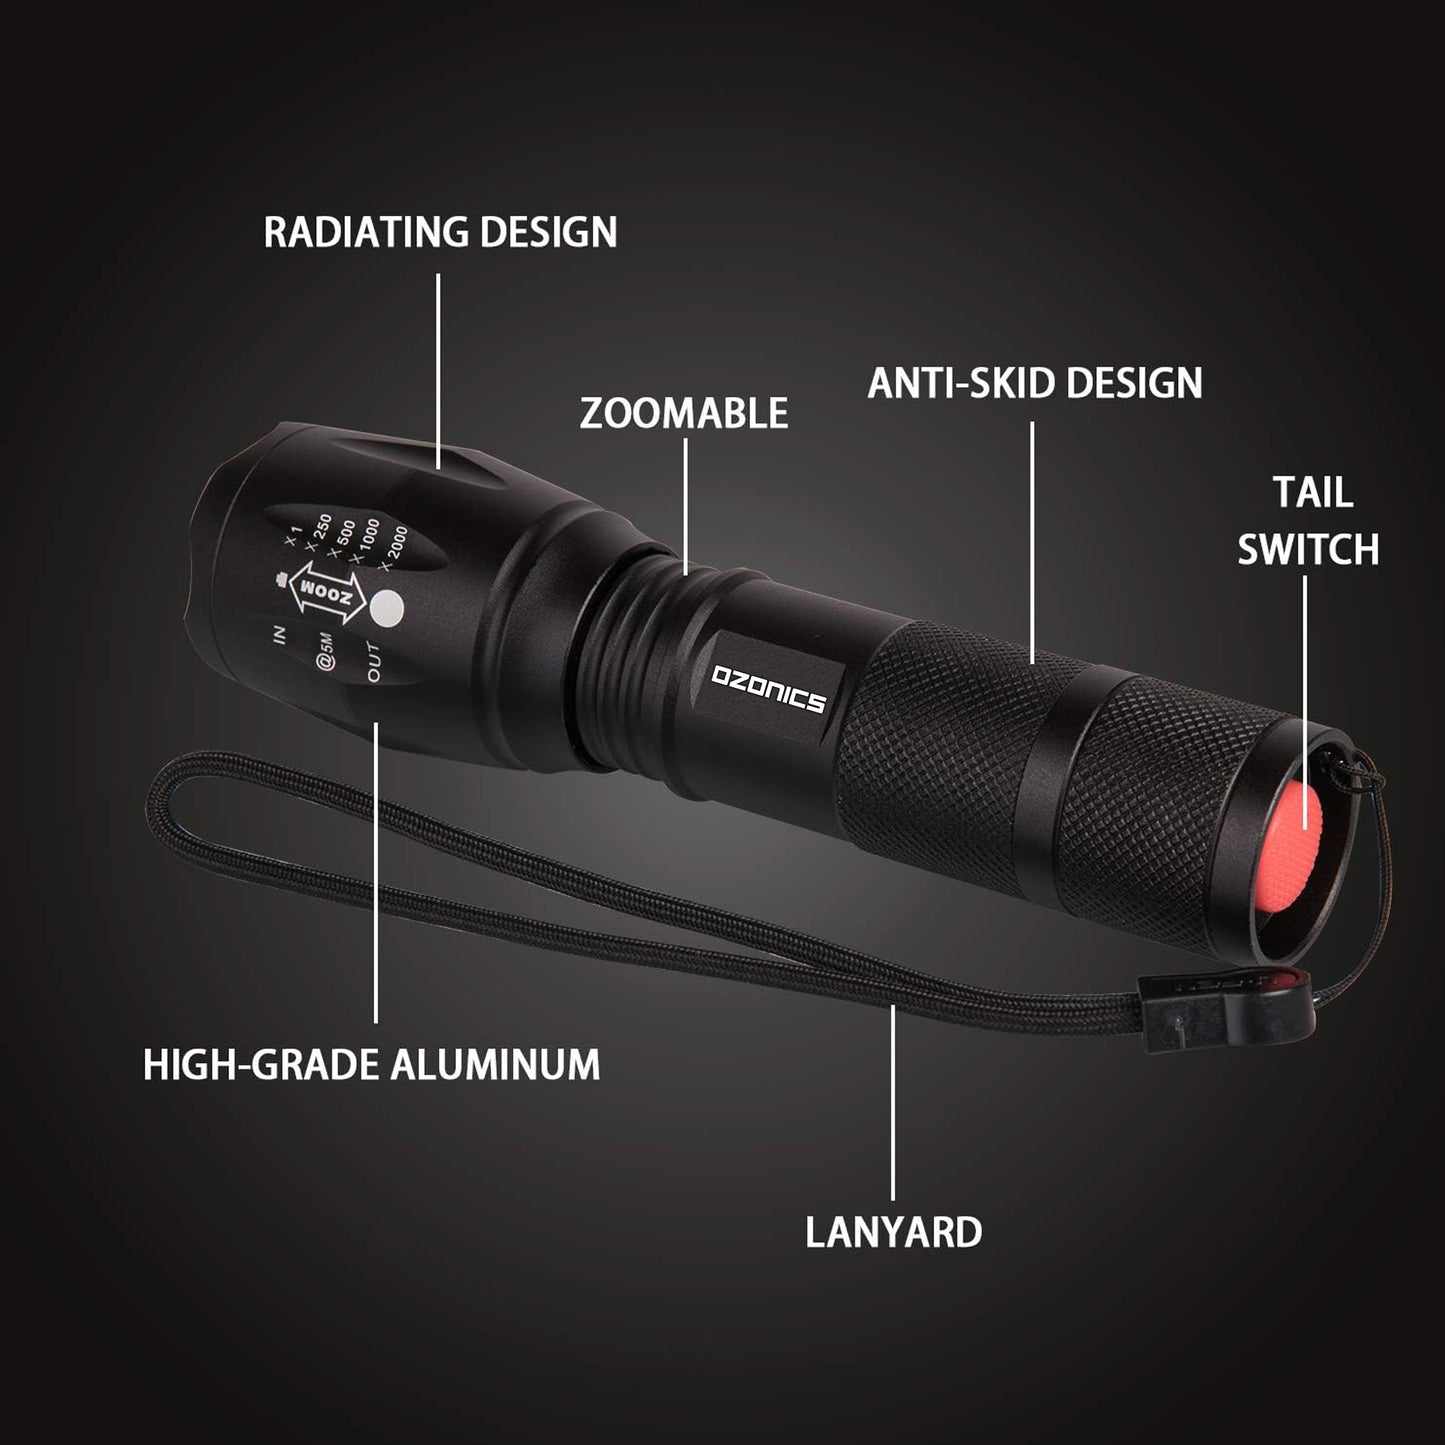 LED Hunting Flashlight